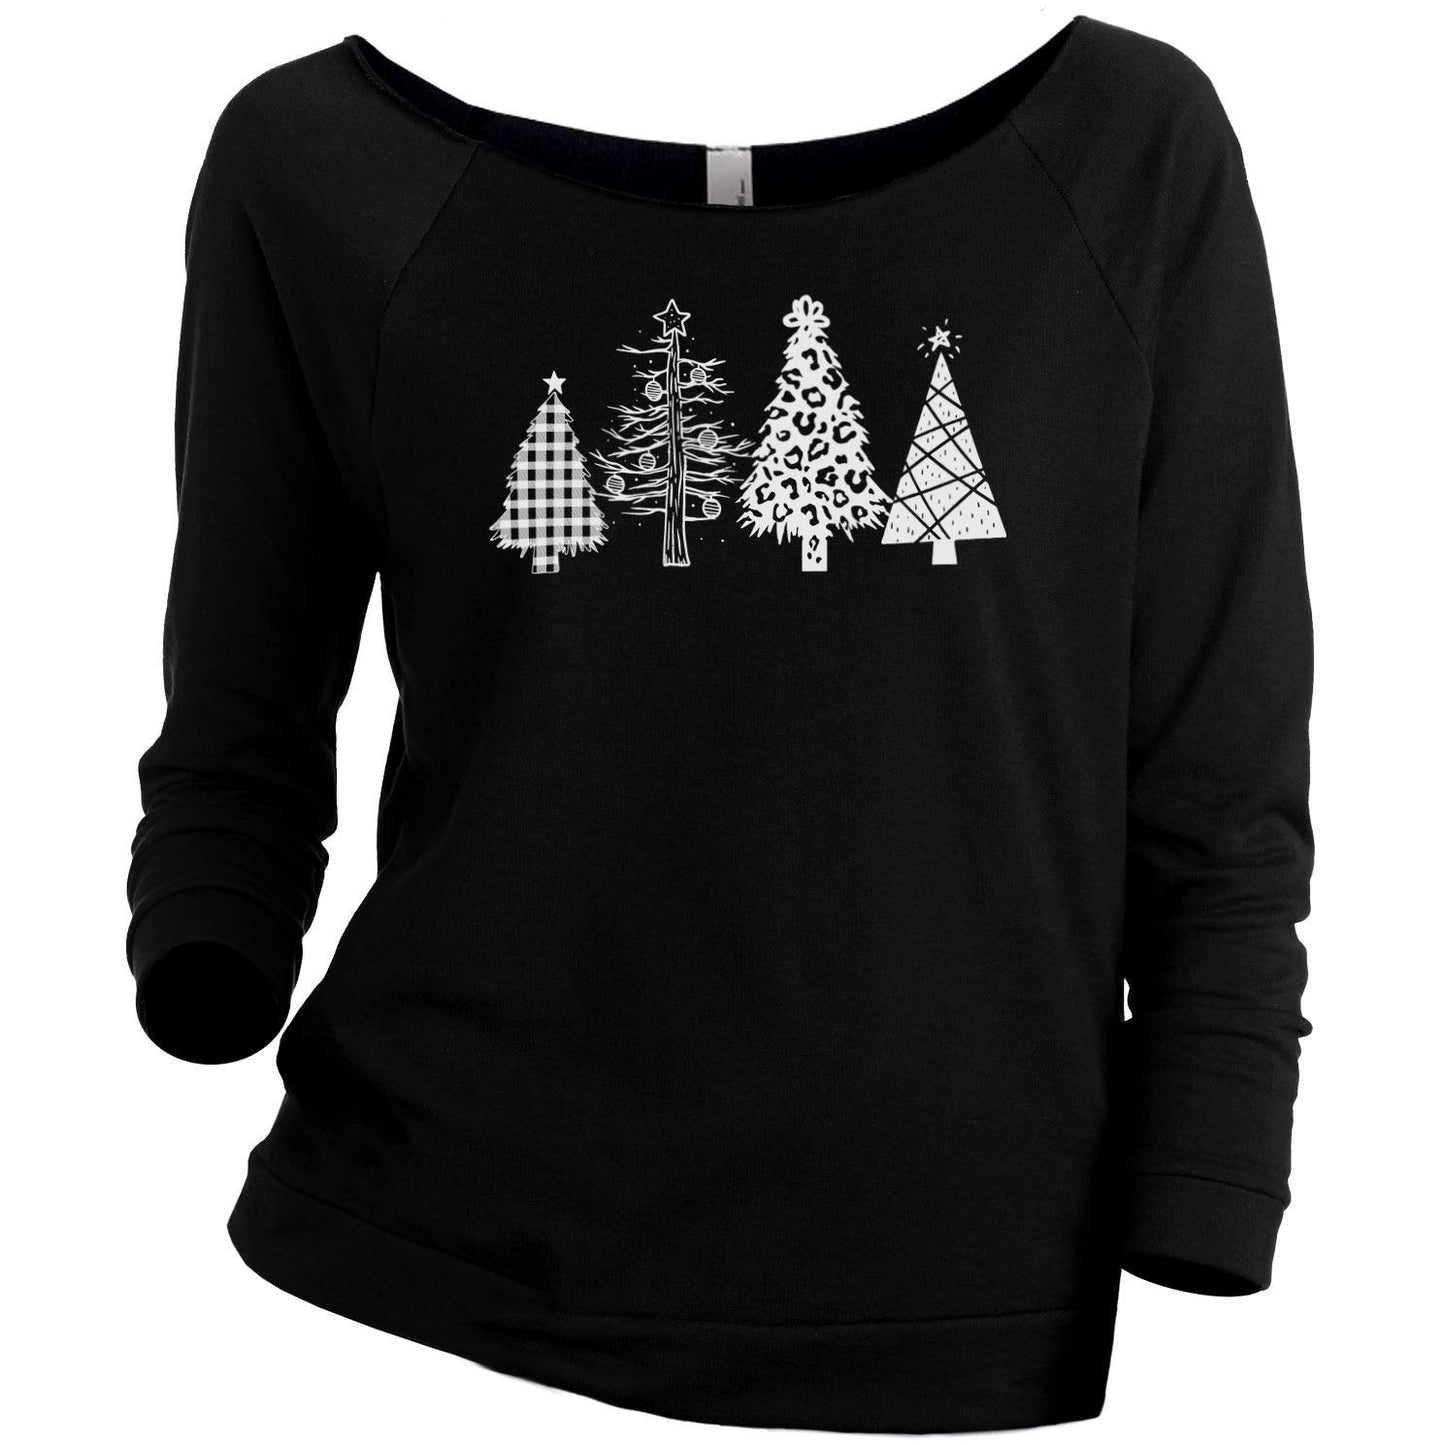 Christmas Tree Season Women's Graphic Printed Lightweight Slouchy 3/4 Sleeves Sweatshirt Black